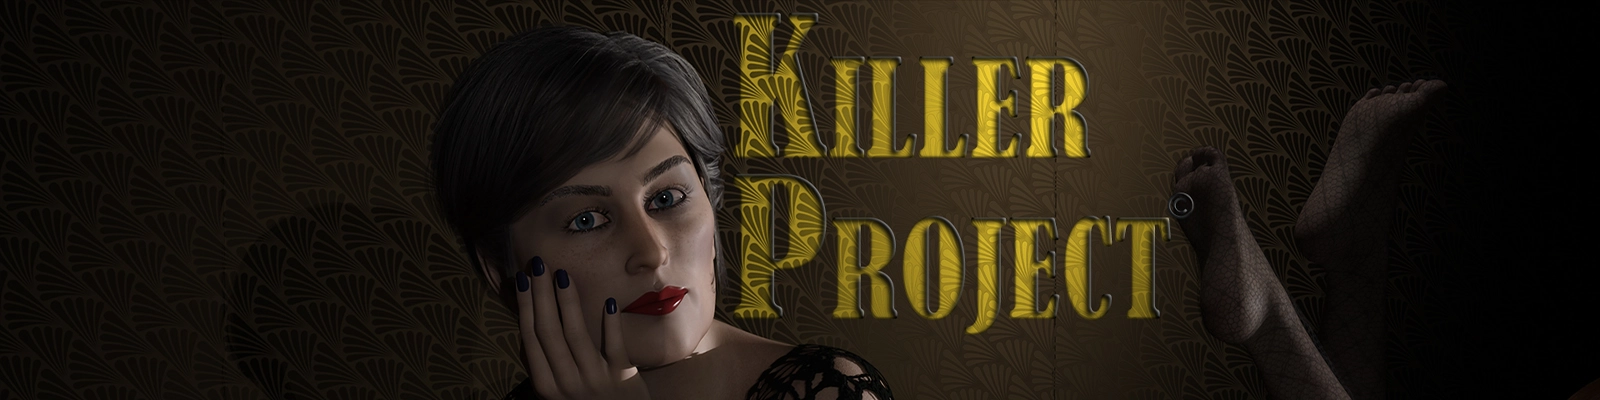 Killer Project [v1.01] main image